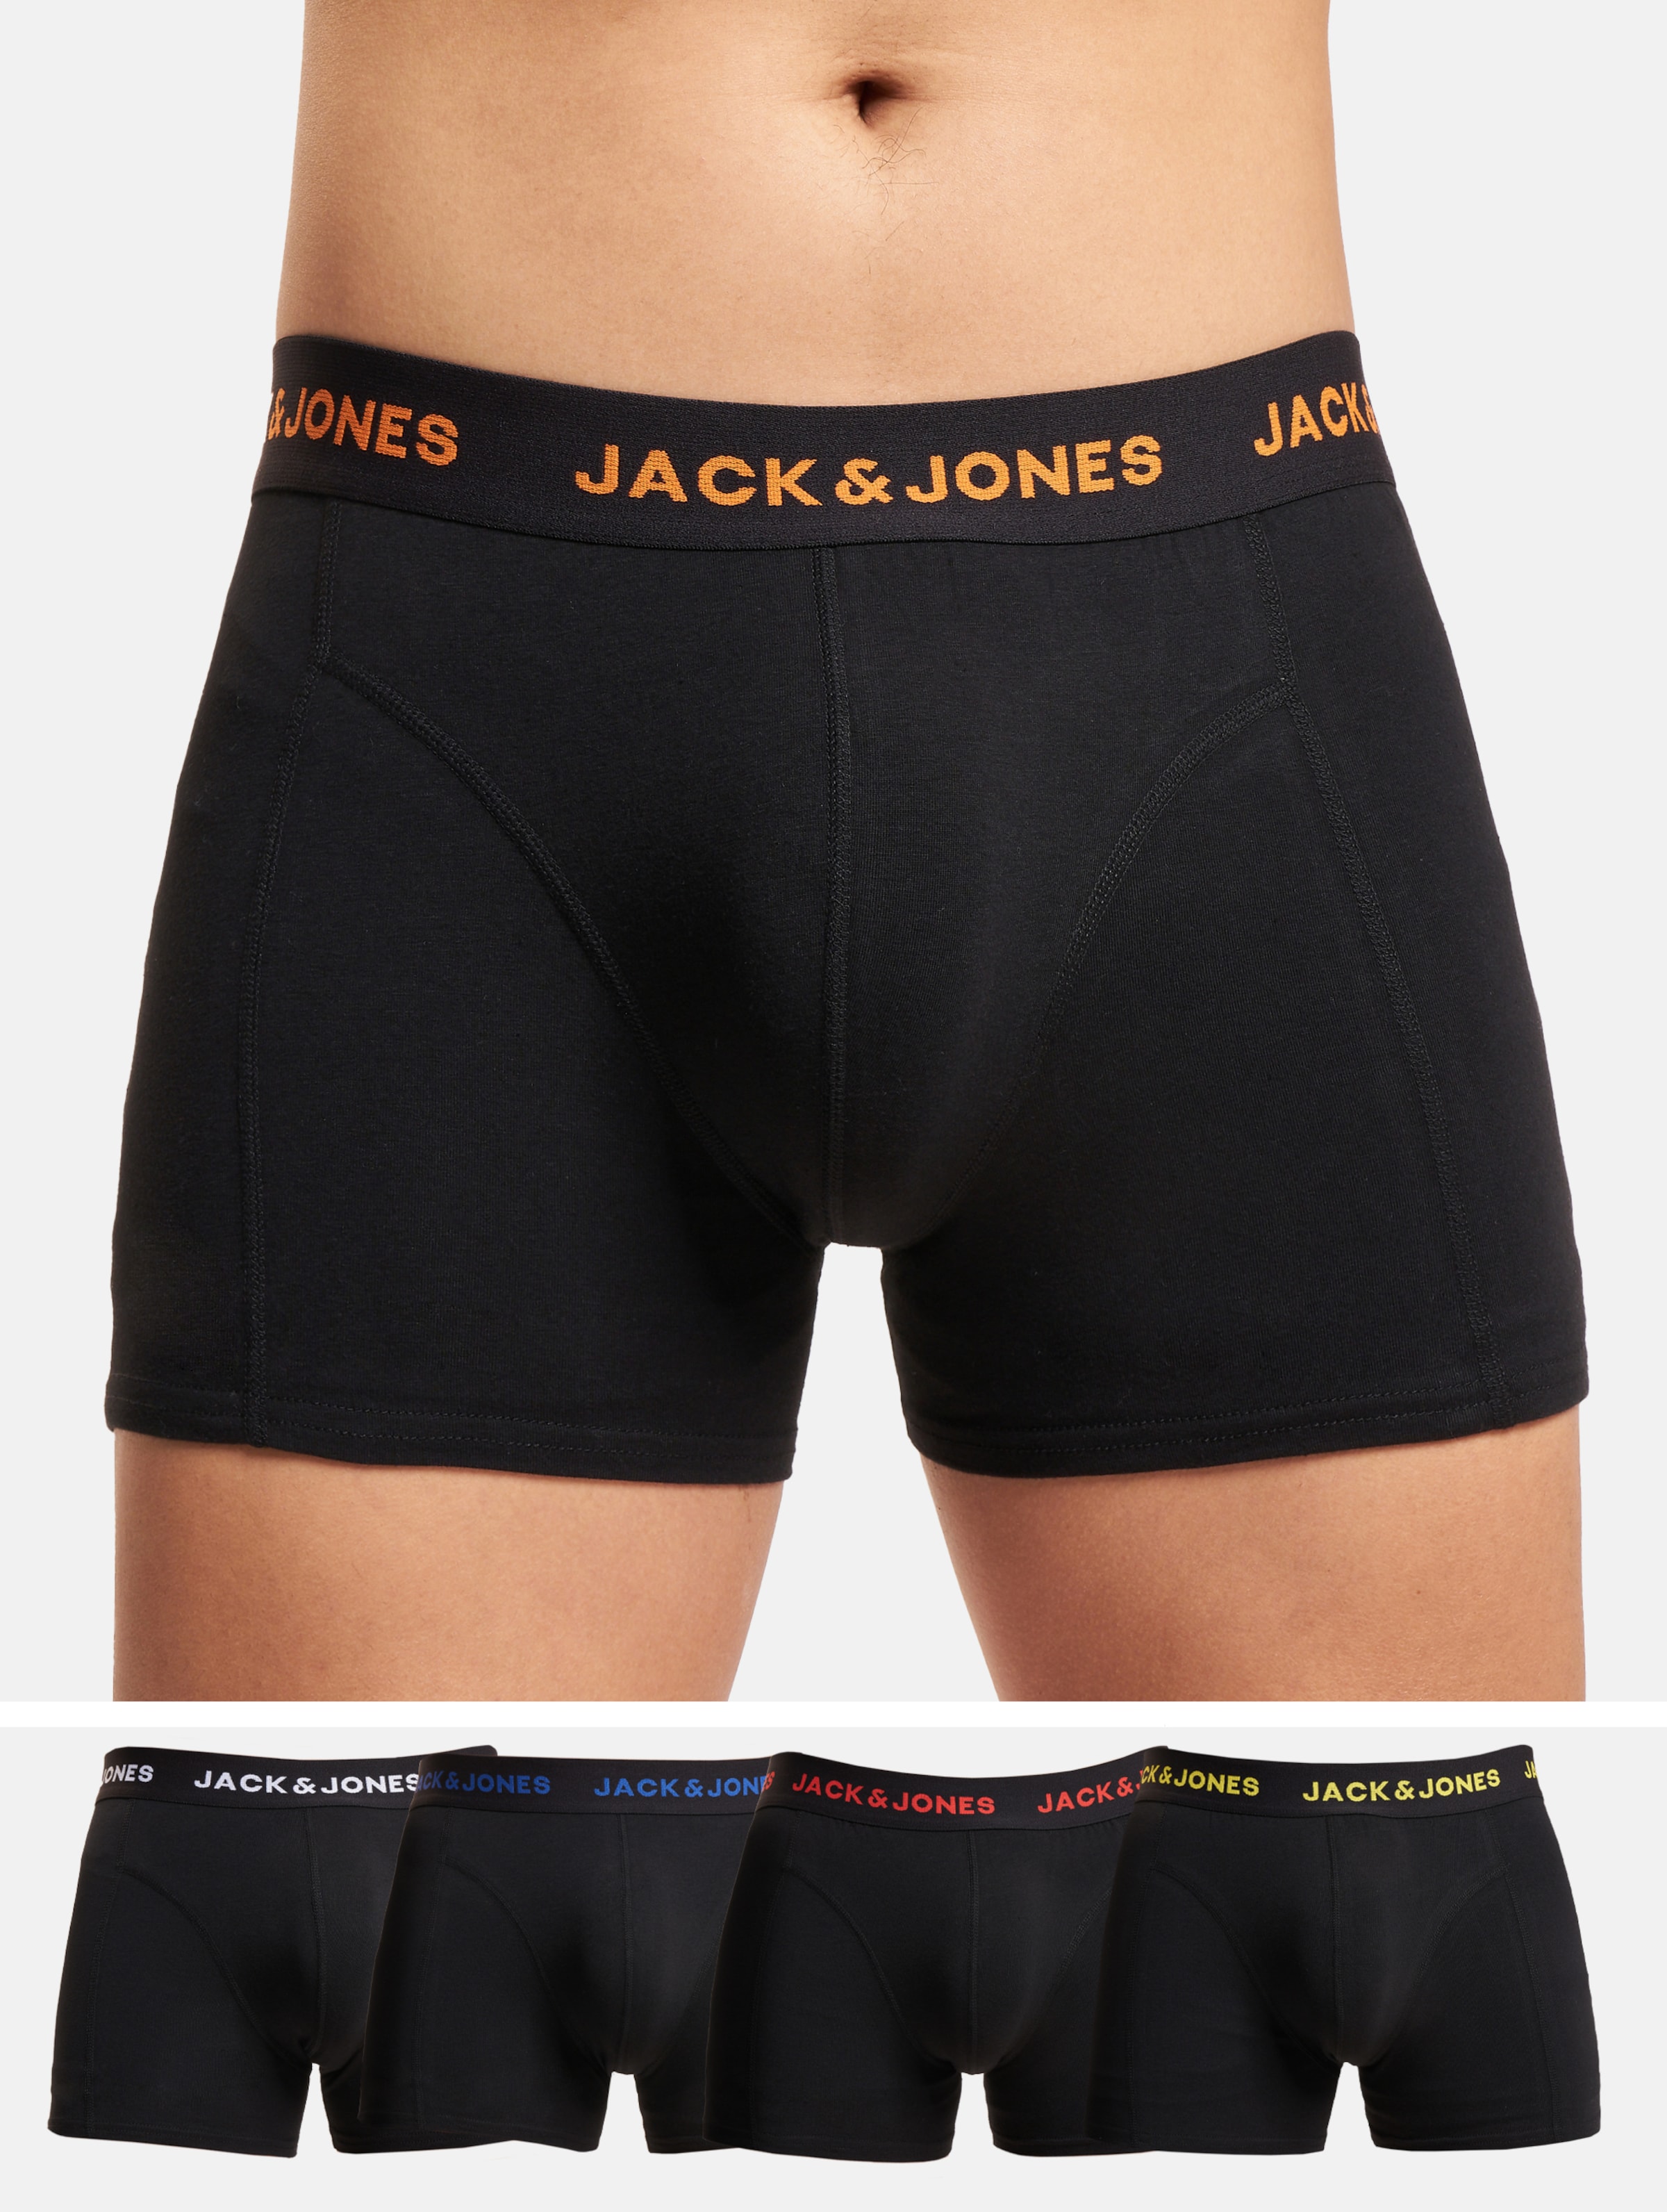 JACK&JONES JACBLACK FRIDAY TRUNKS 5 PACK BOX Heren Onderbroek - Maat XL